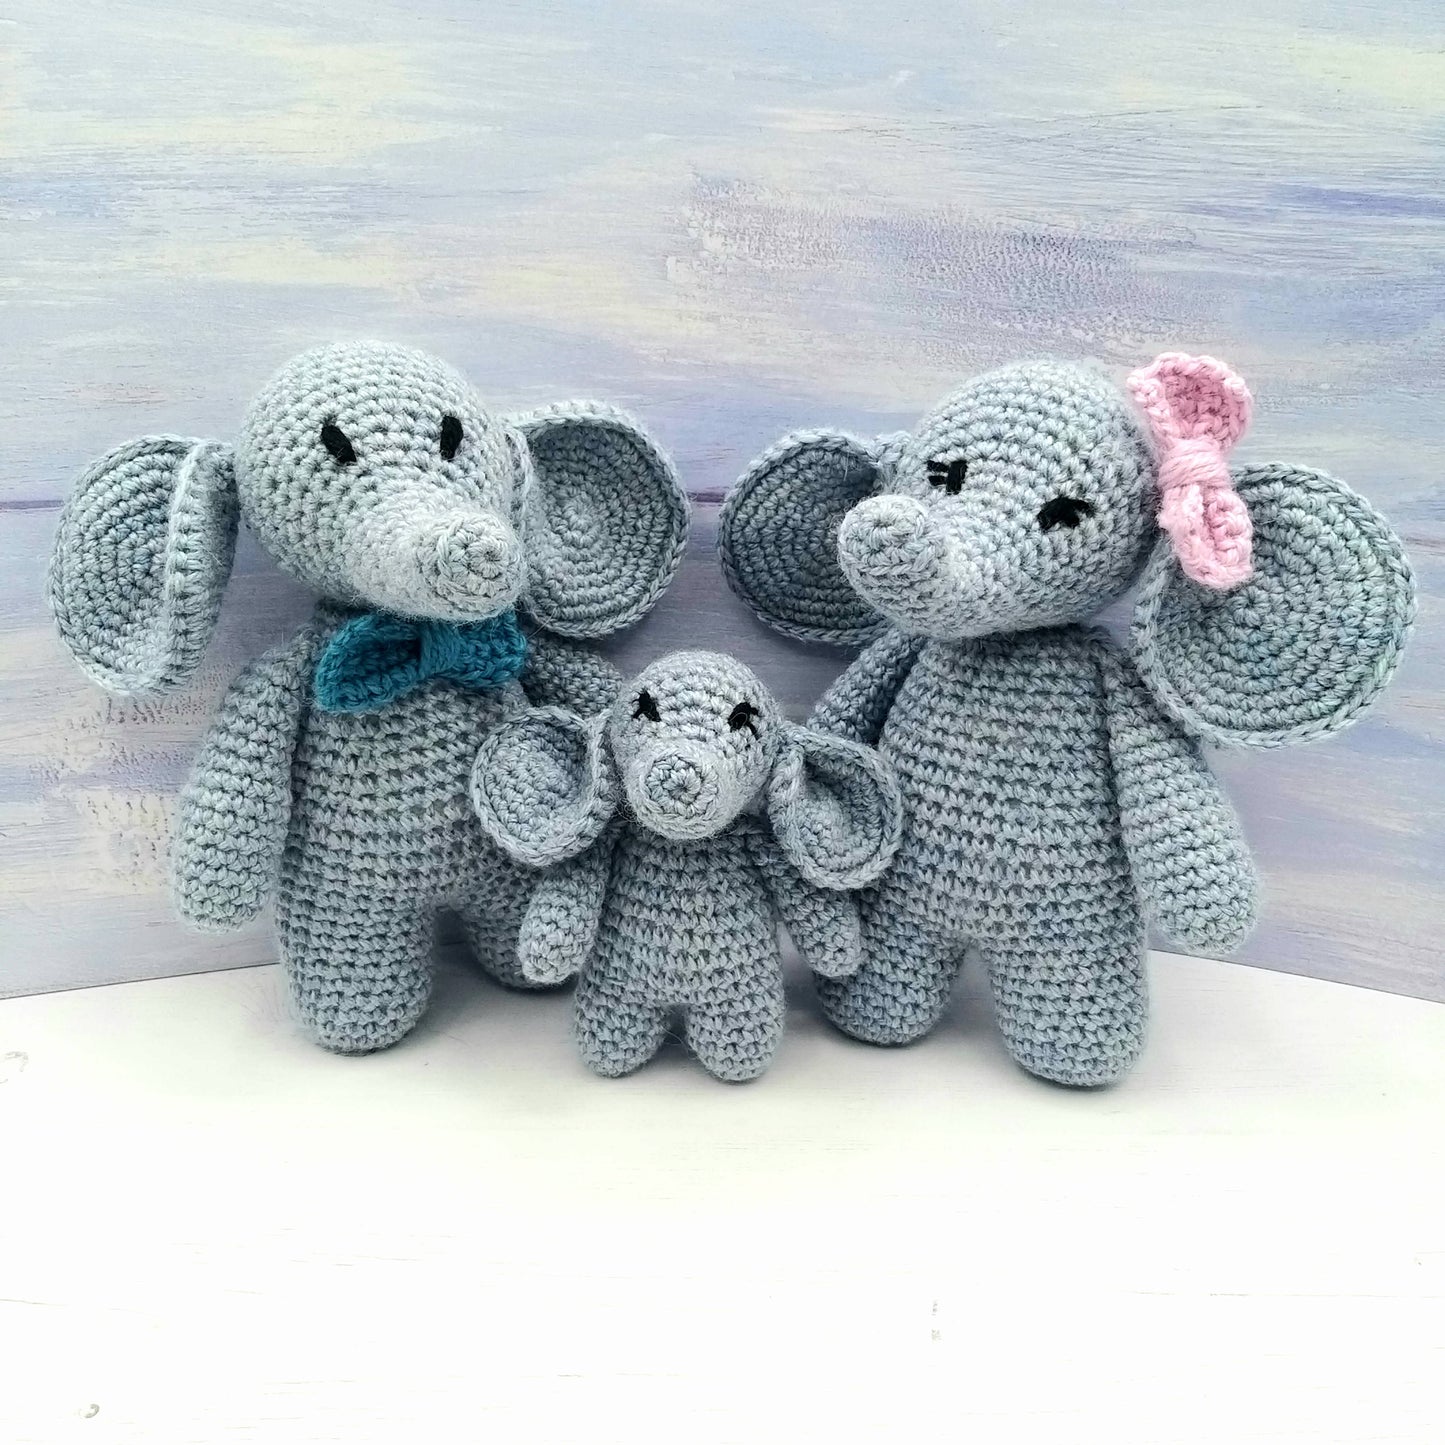 Toy Crochet Elephants + Baby Crochet Elephant